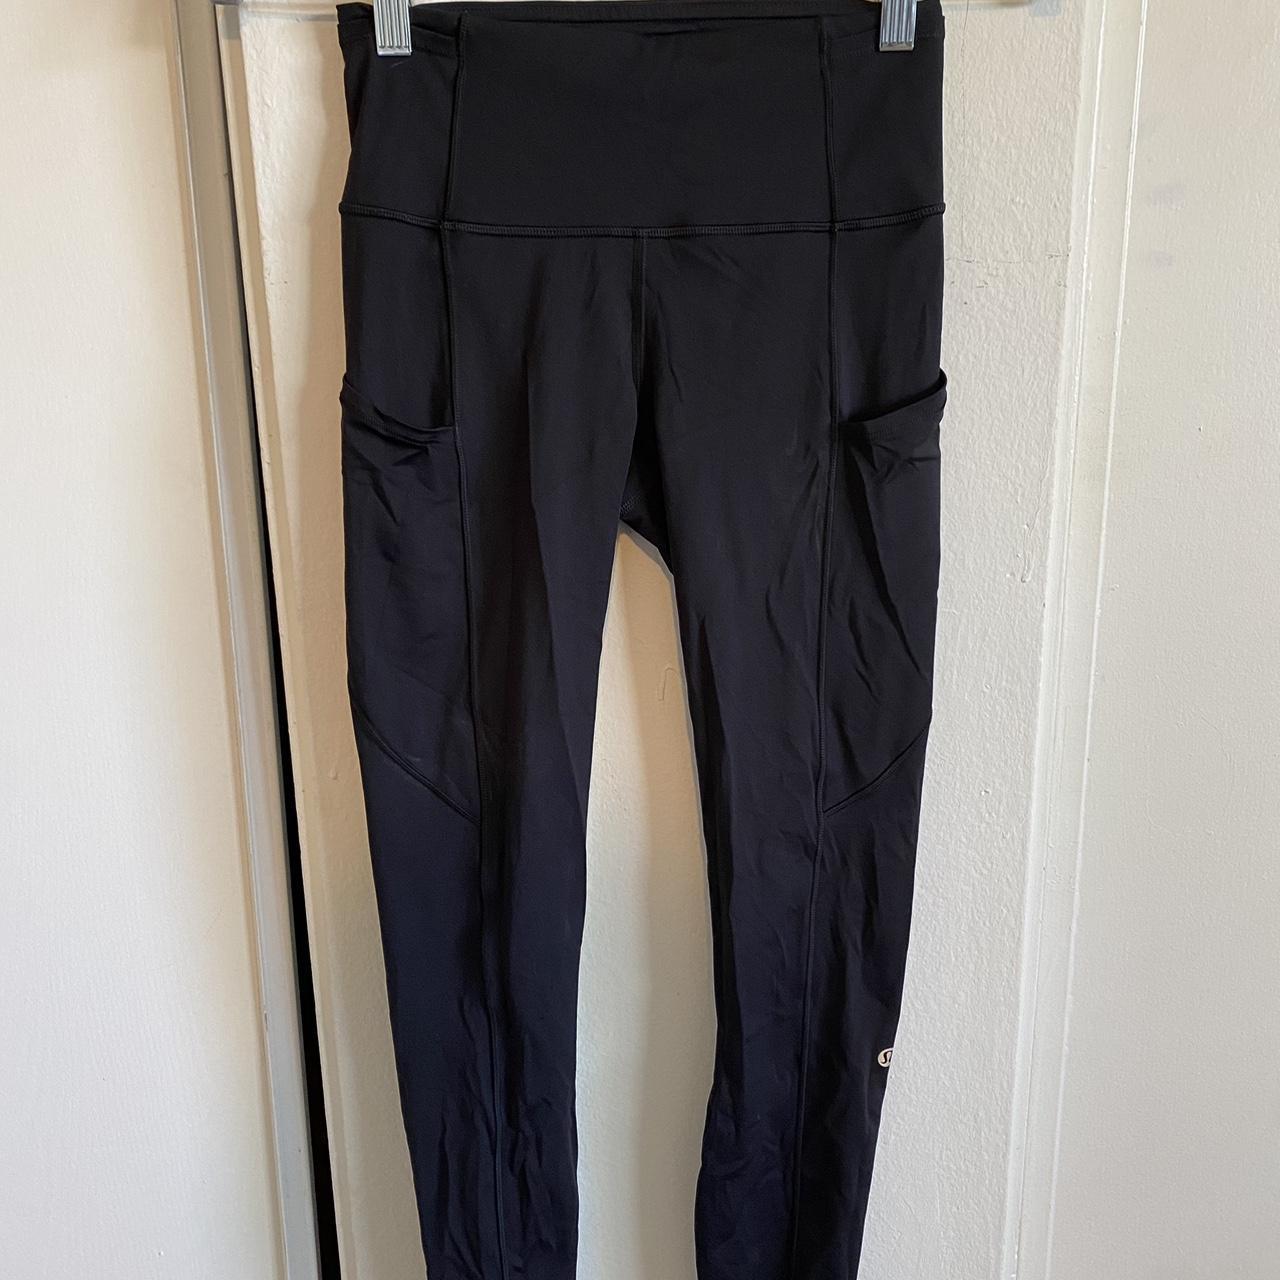 3/4 length lululemon leggings , size 4, has great